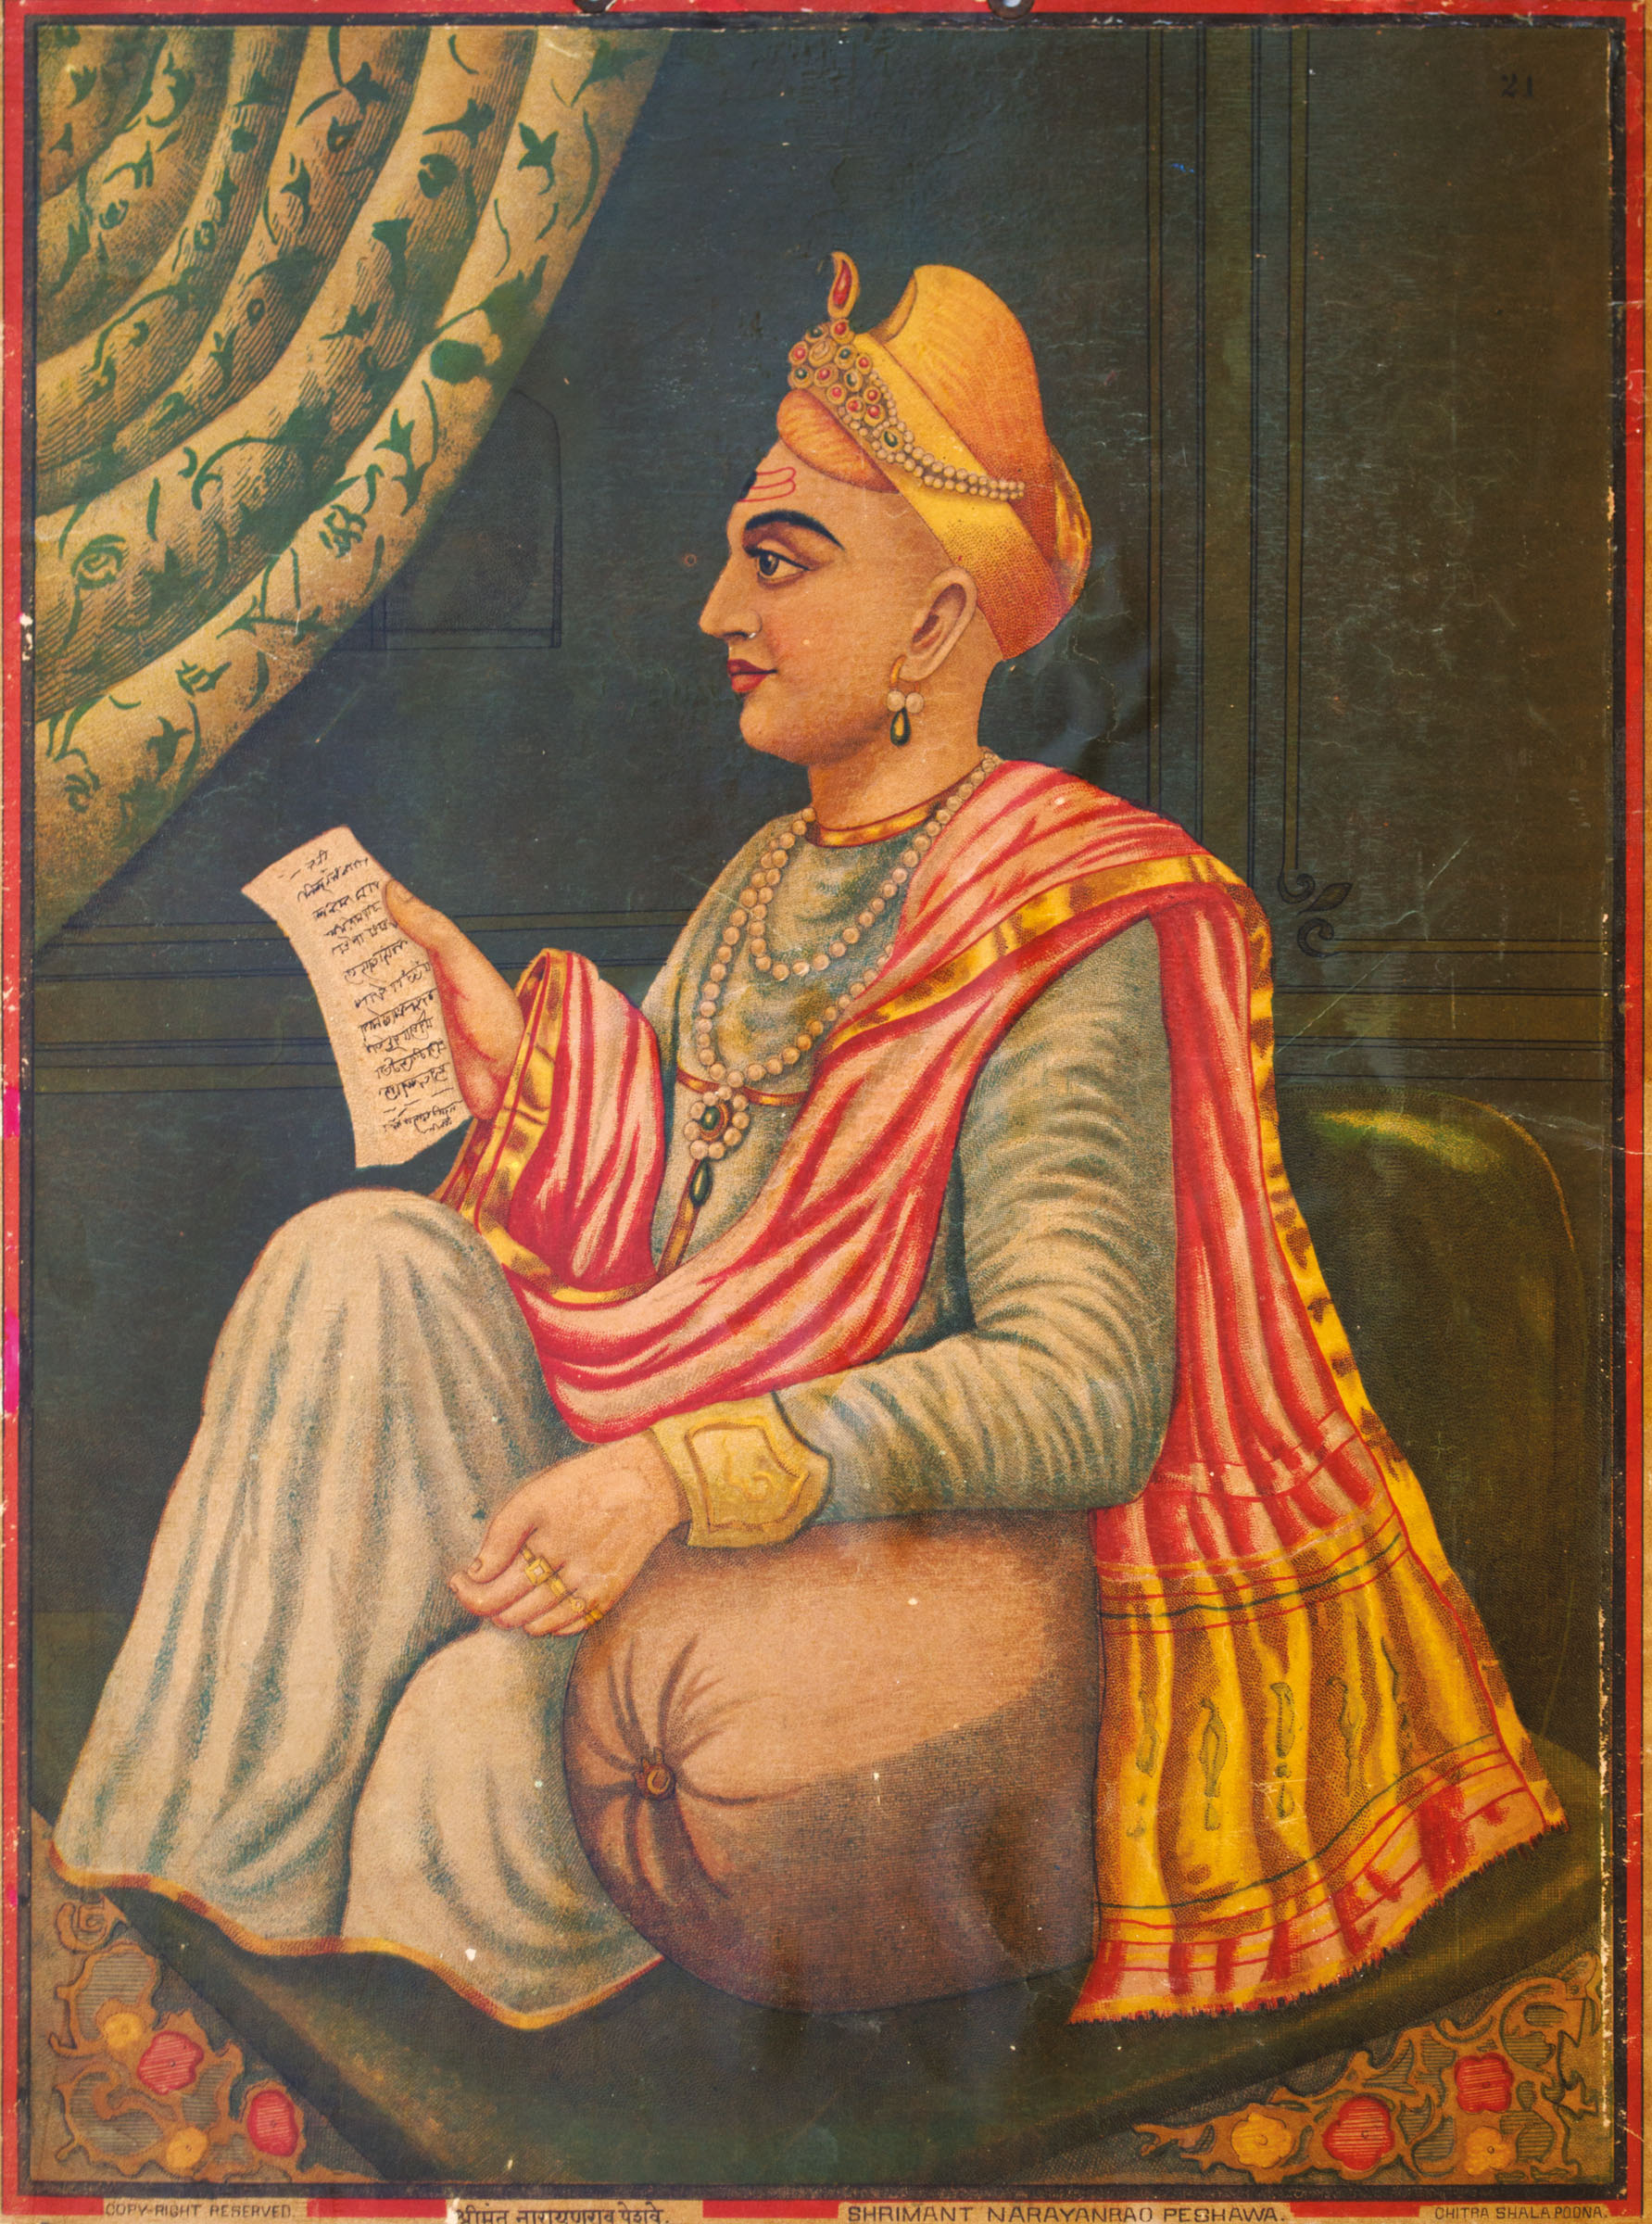 Shrimant Narayanrao Peshwa (1755-1773)